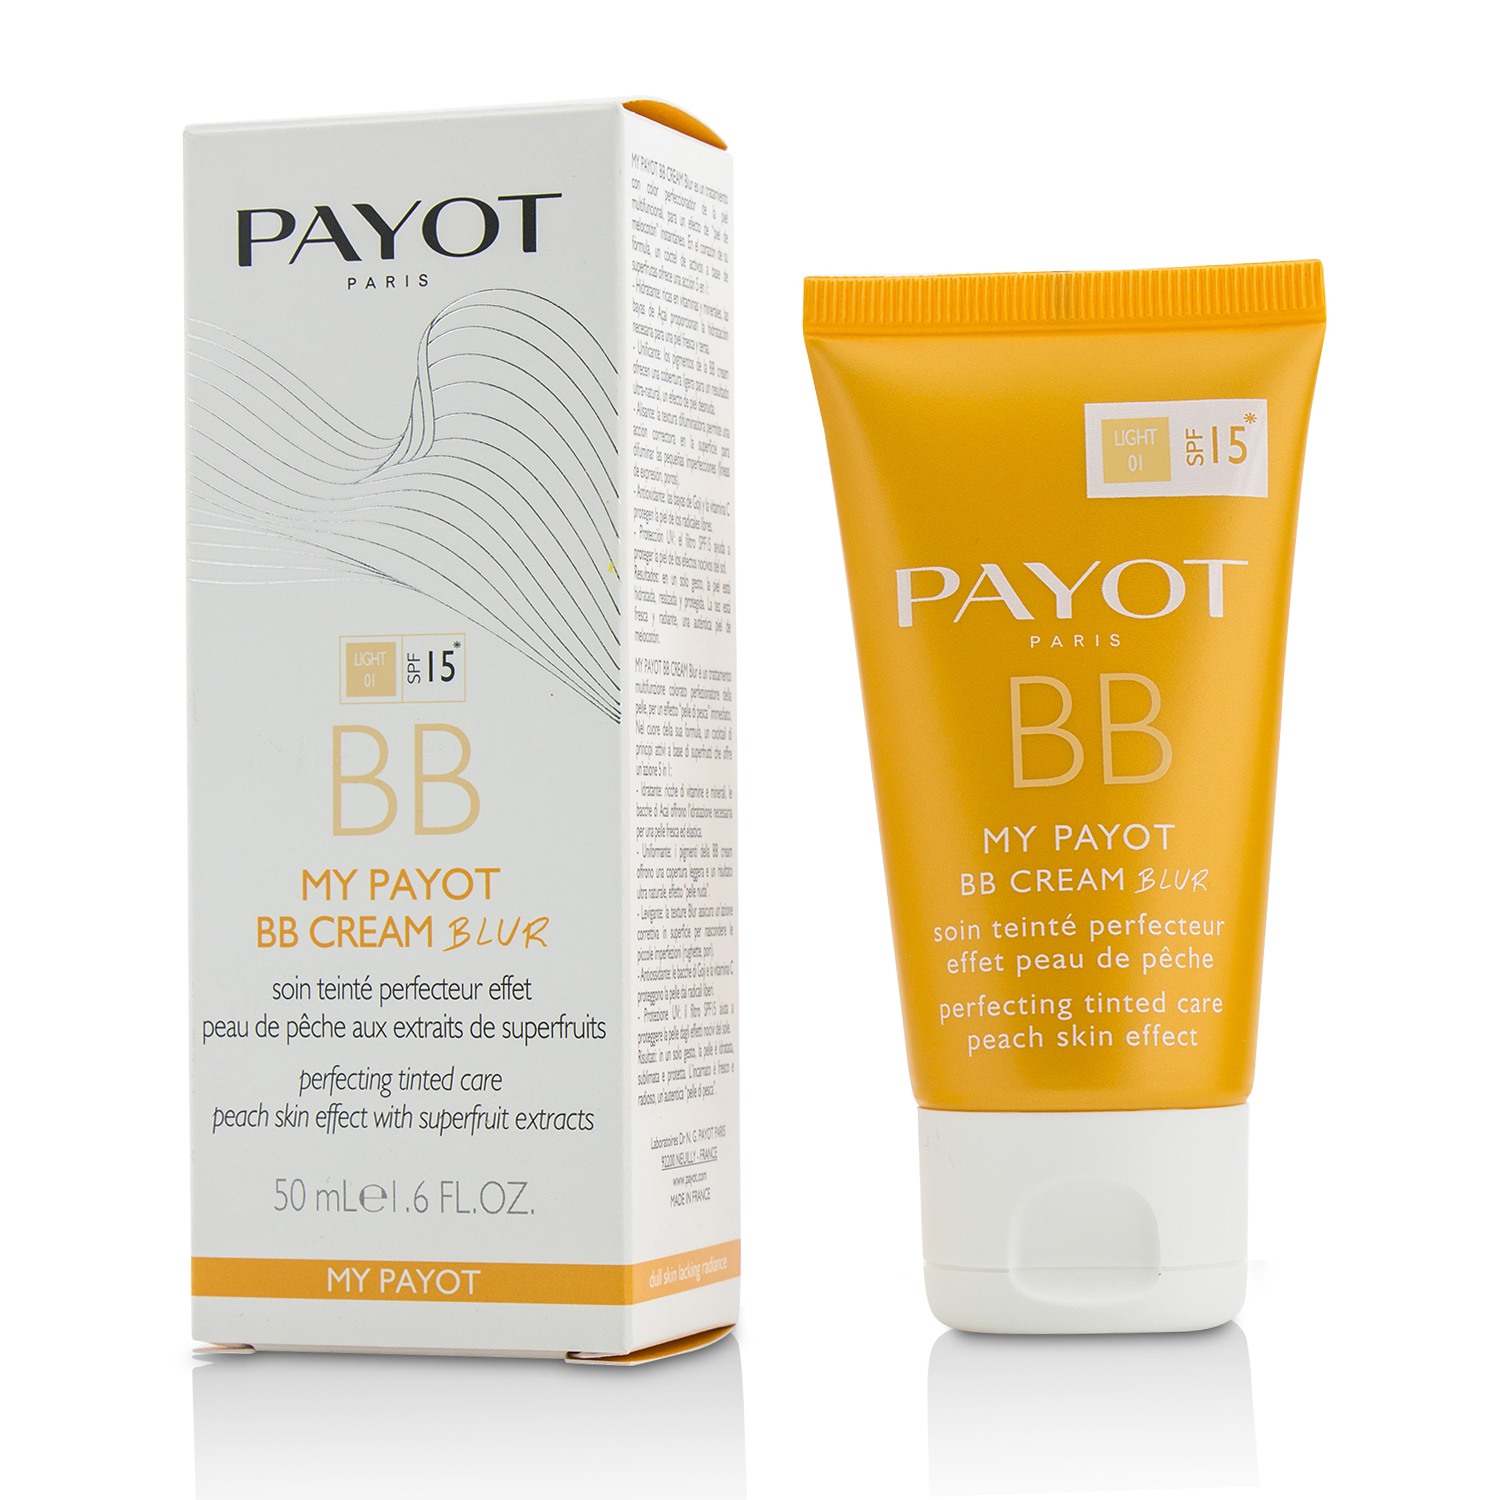 My Payot BB Cream Blur SPF15 - 01 Light Payot Image